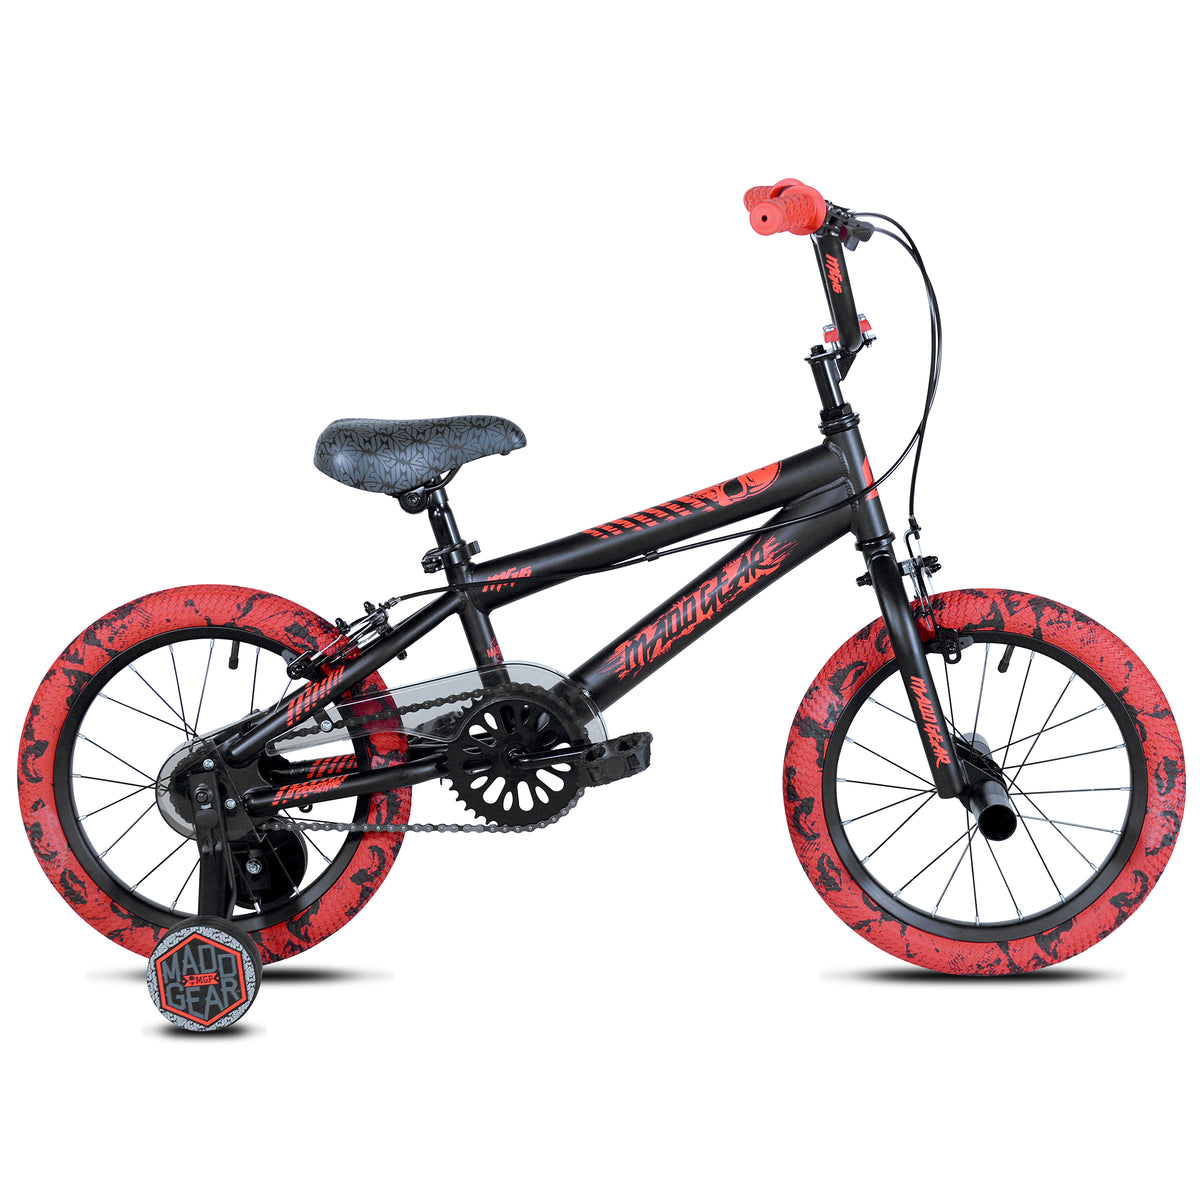 16" Madd Gear® MG16 | BMX Bike for Kids Ages 4-6